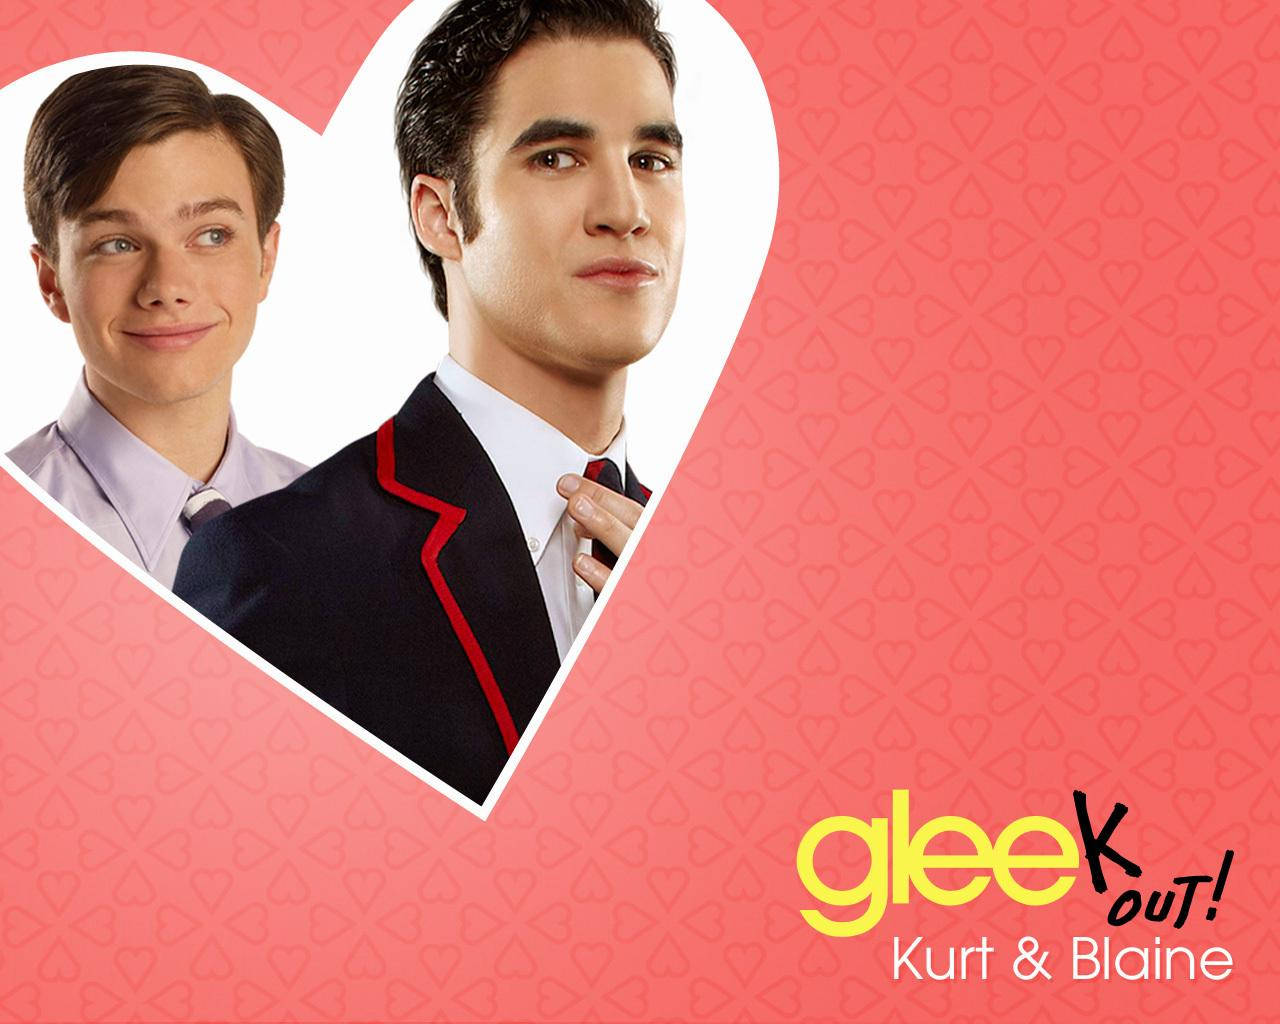 Chris Colfer As Kurt With Blaine Background